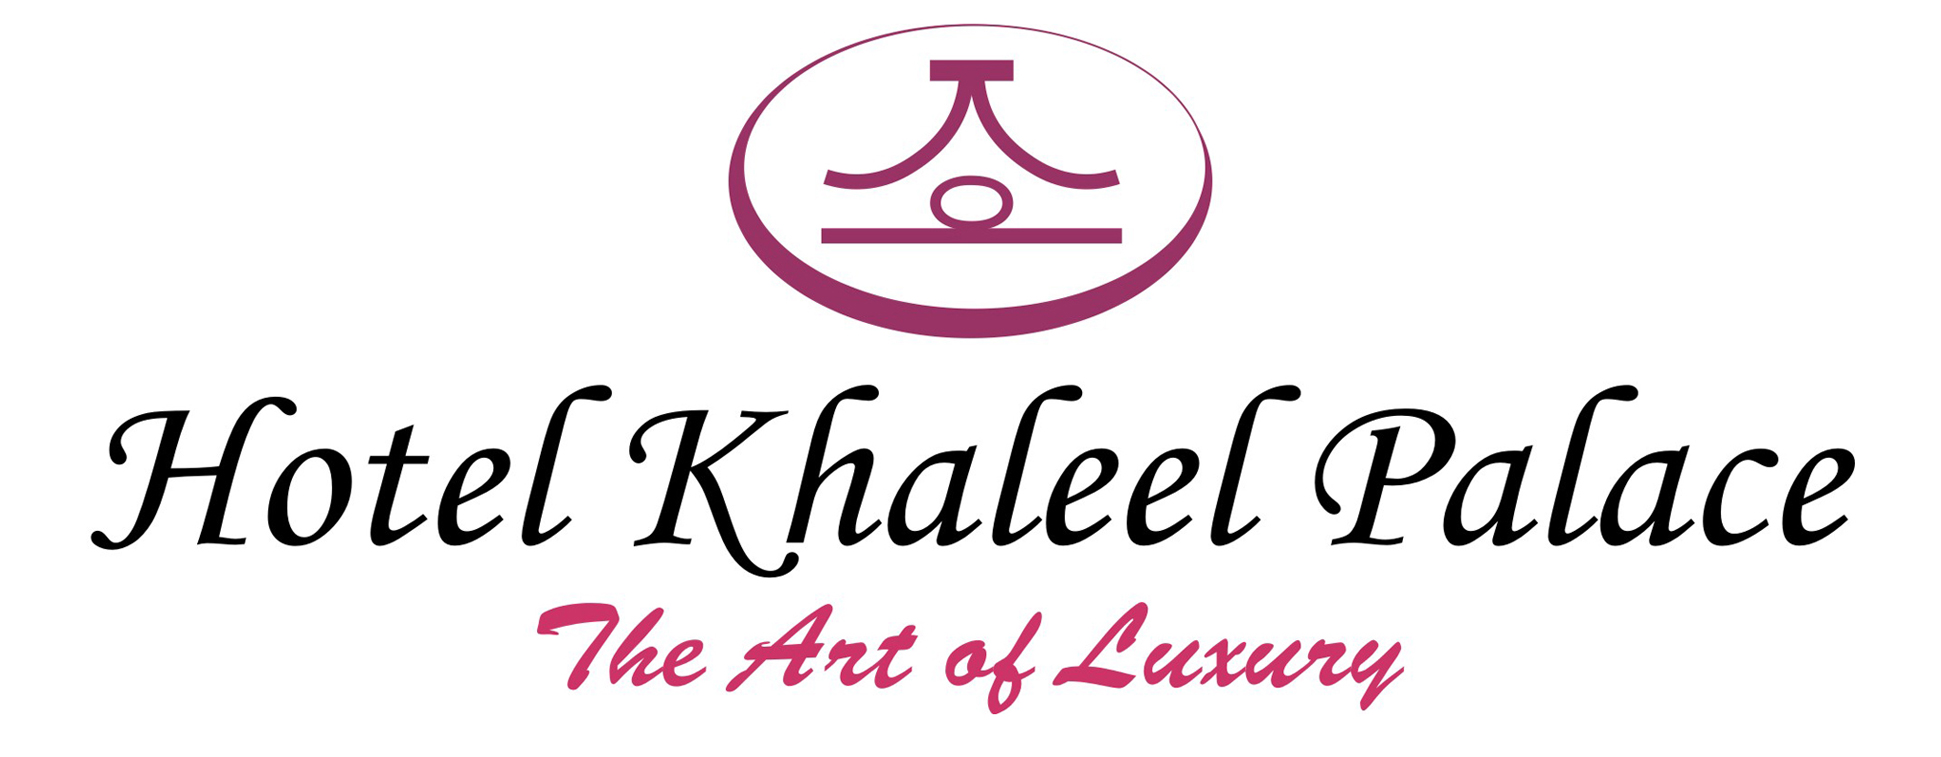 Hotel Khaleel Palace|Resort|Accomodation